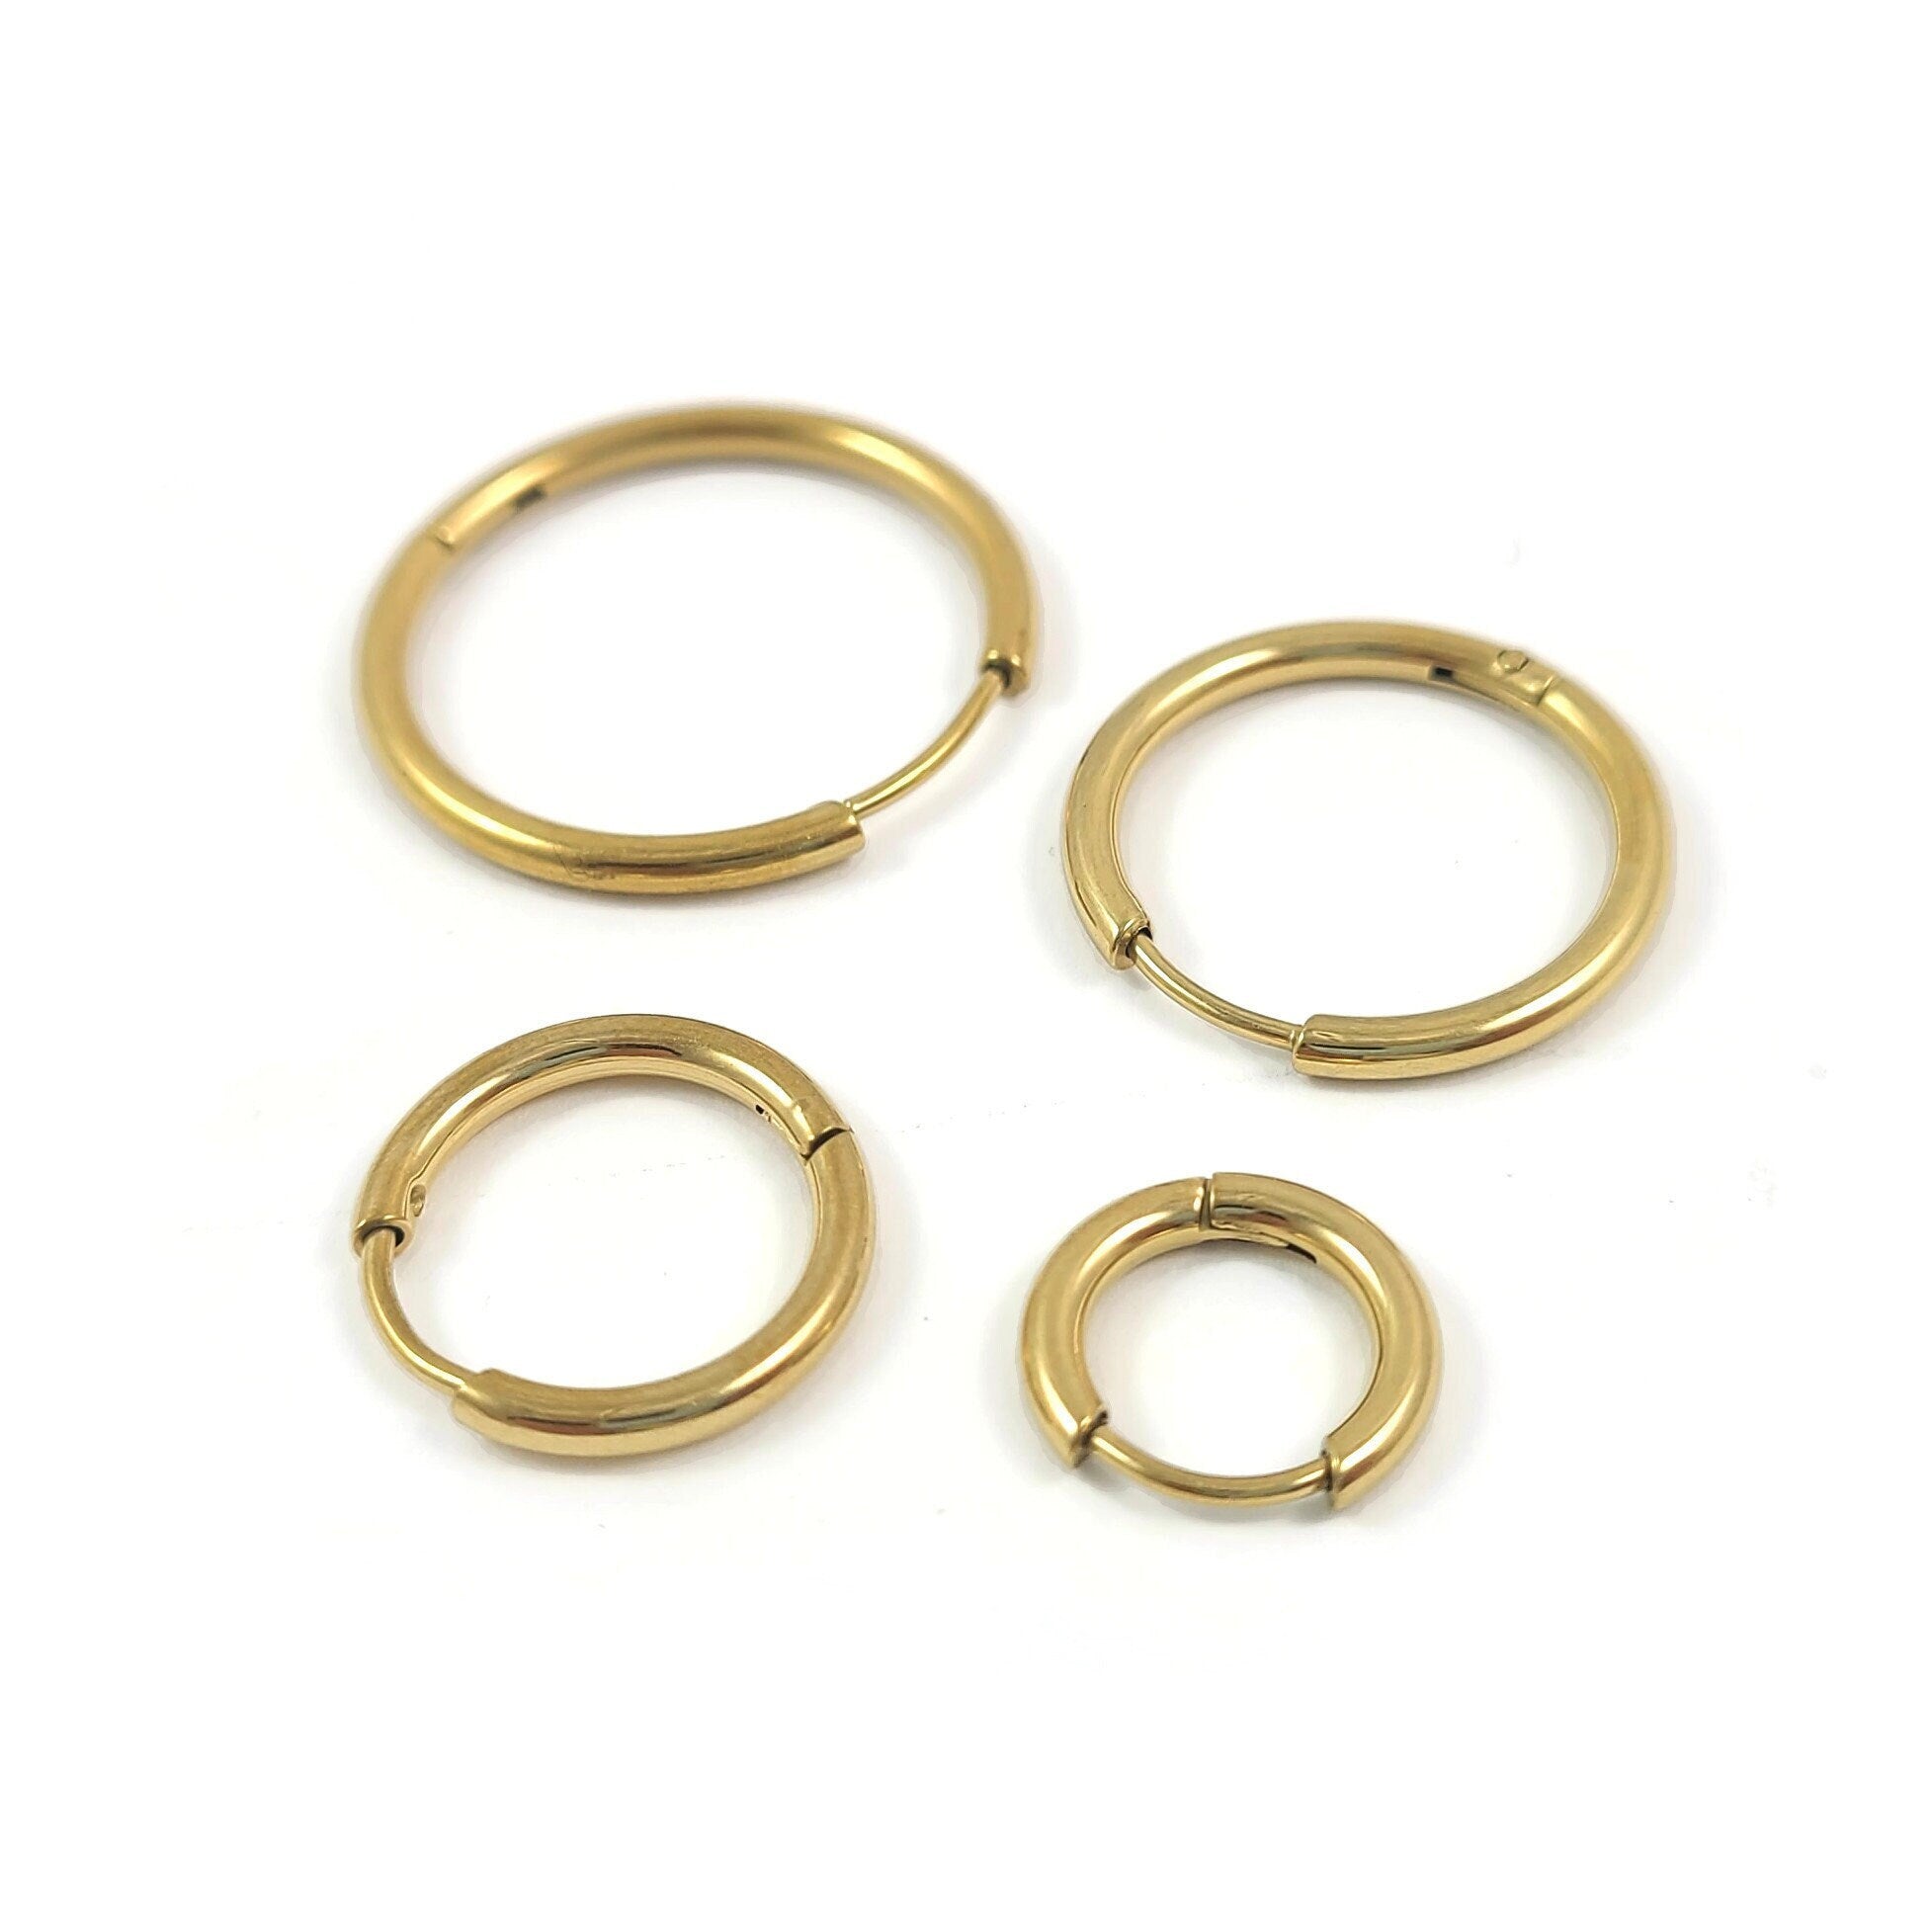 Gold stainless steel earring hoops, Hypoallergenic earring findings